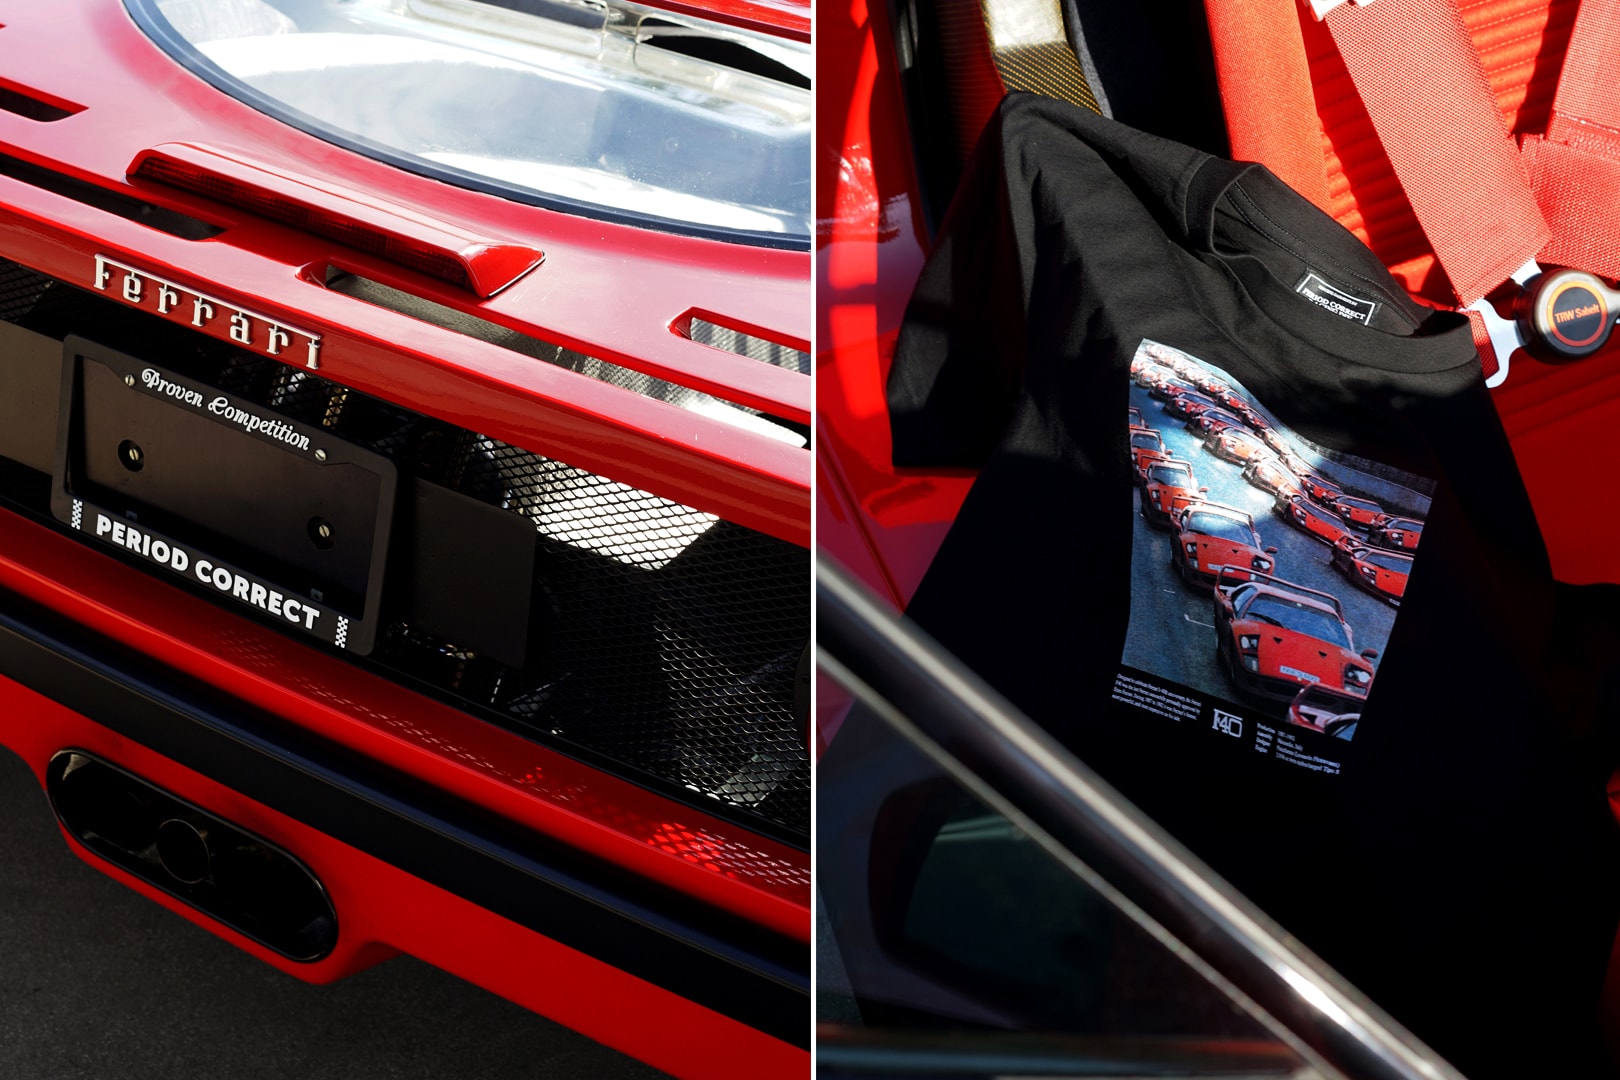 Period Correct 以 Ferrari F40 為靈感打造全新系列